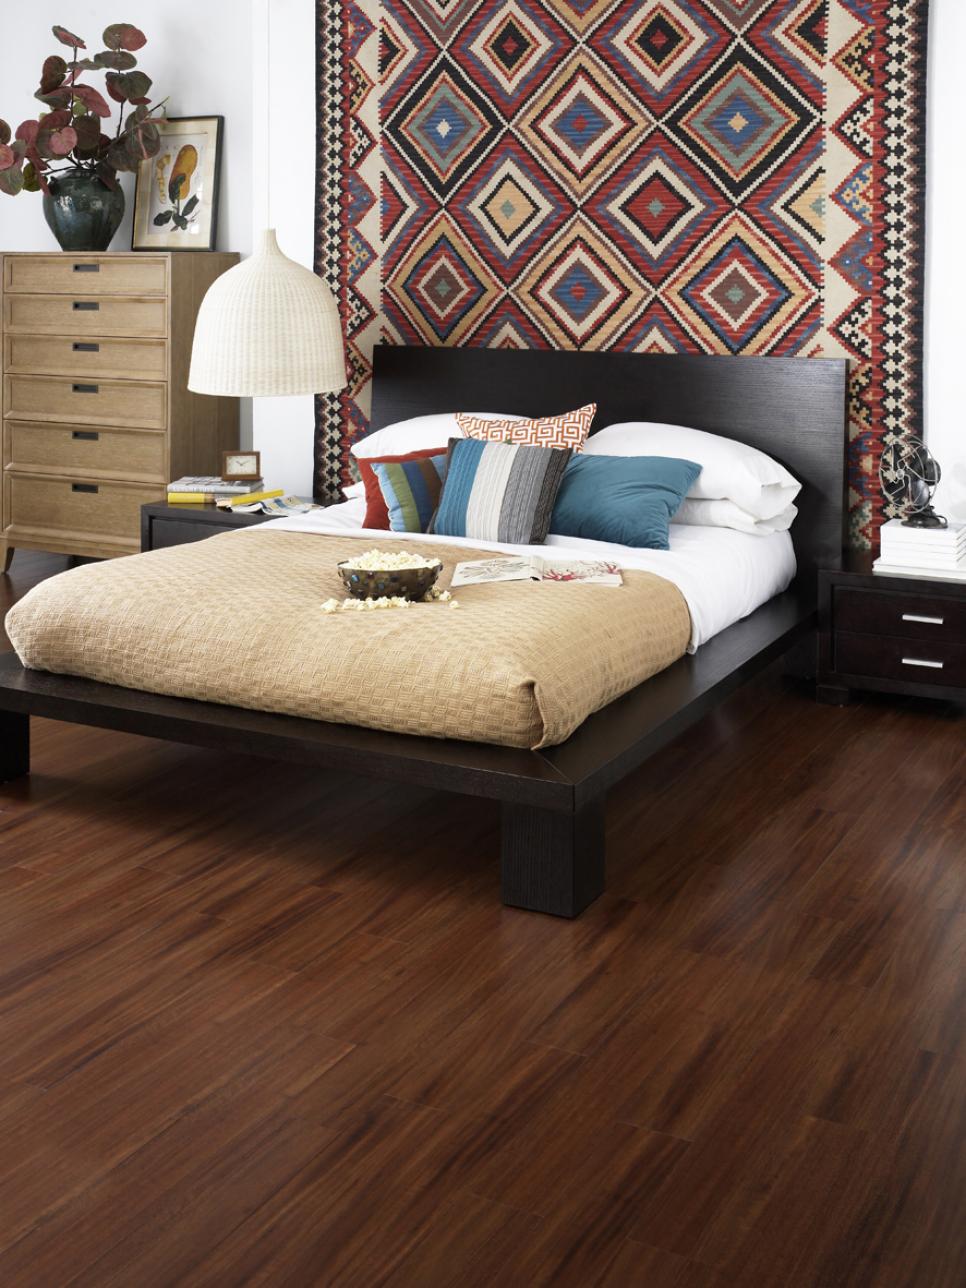 11 Pictures of Bedroom Flooring Ideas From HGTV Remodels | HGTV